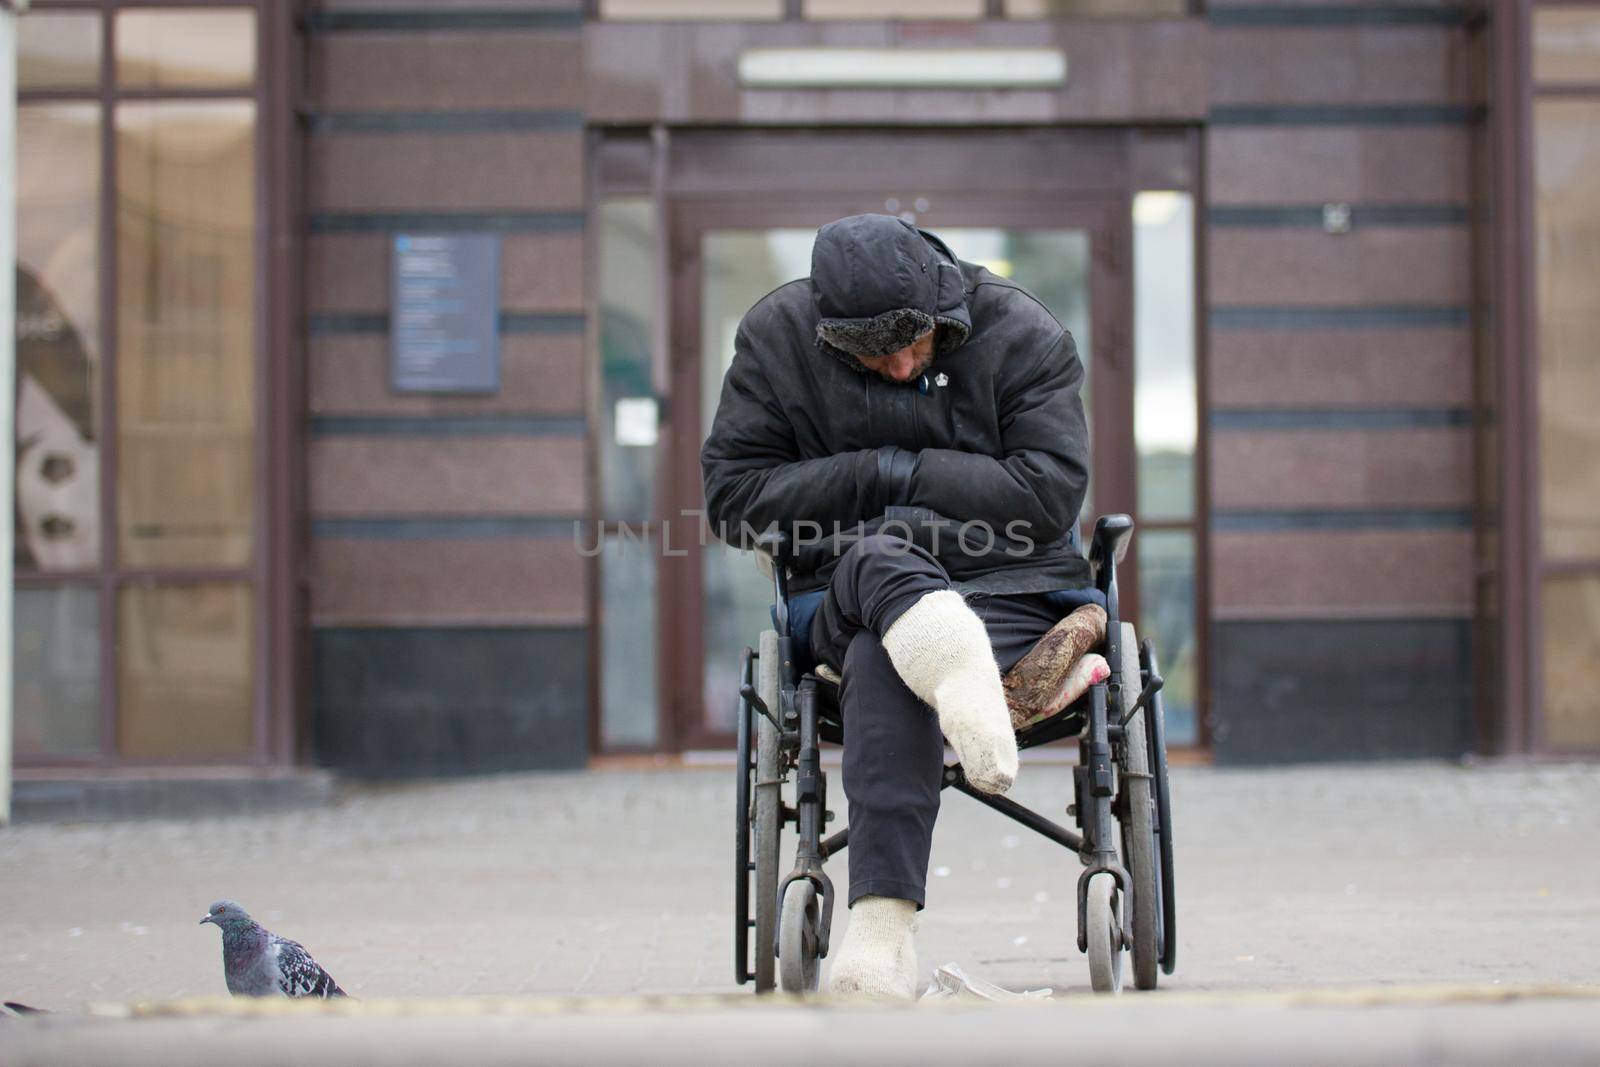 Russia, Kazan 14 september 2016, dowmtown - Disabled homeless man on a wheelchair begging for money - drunk beggar sleeping, telephoto